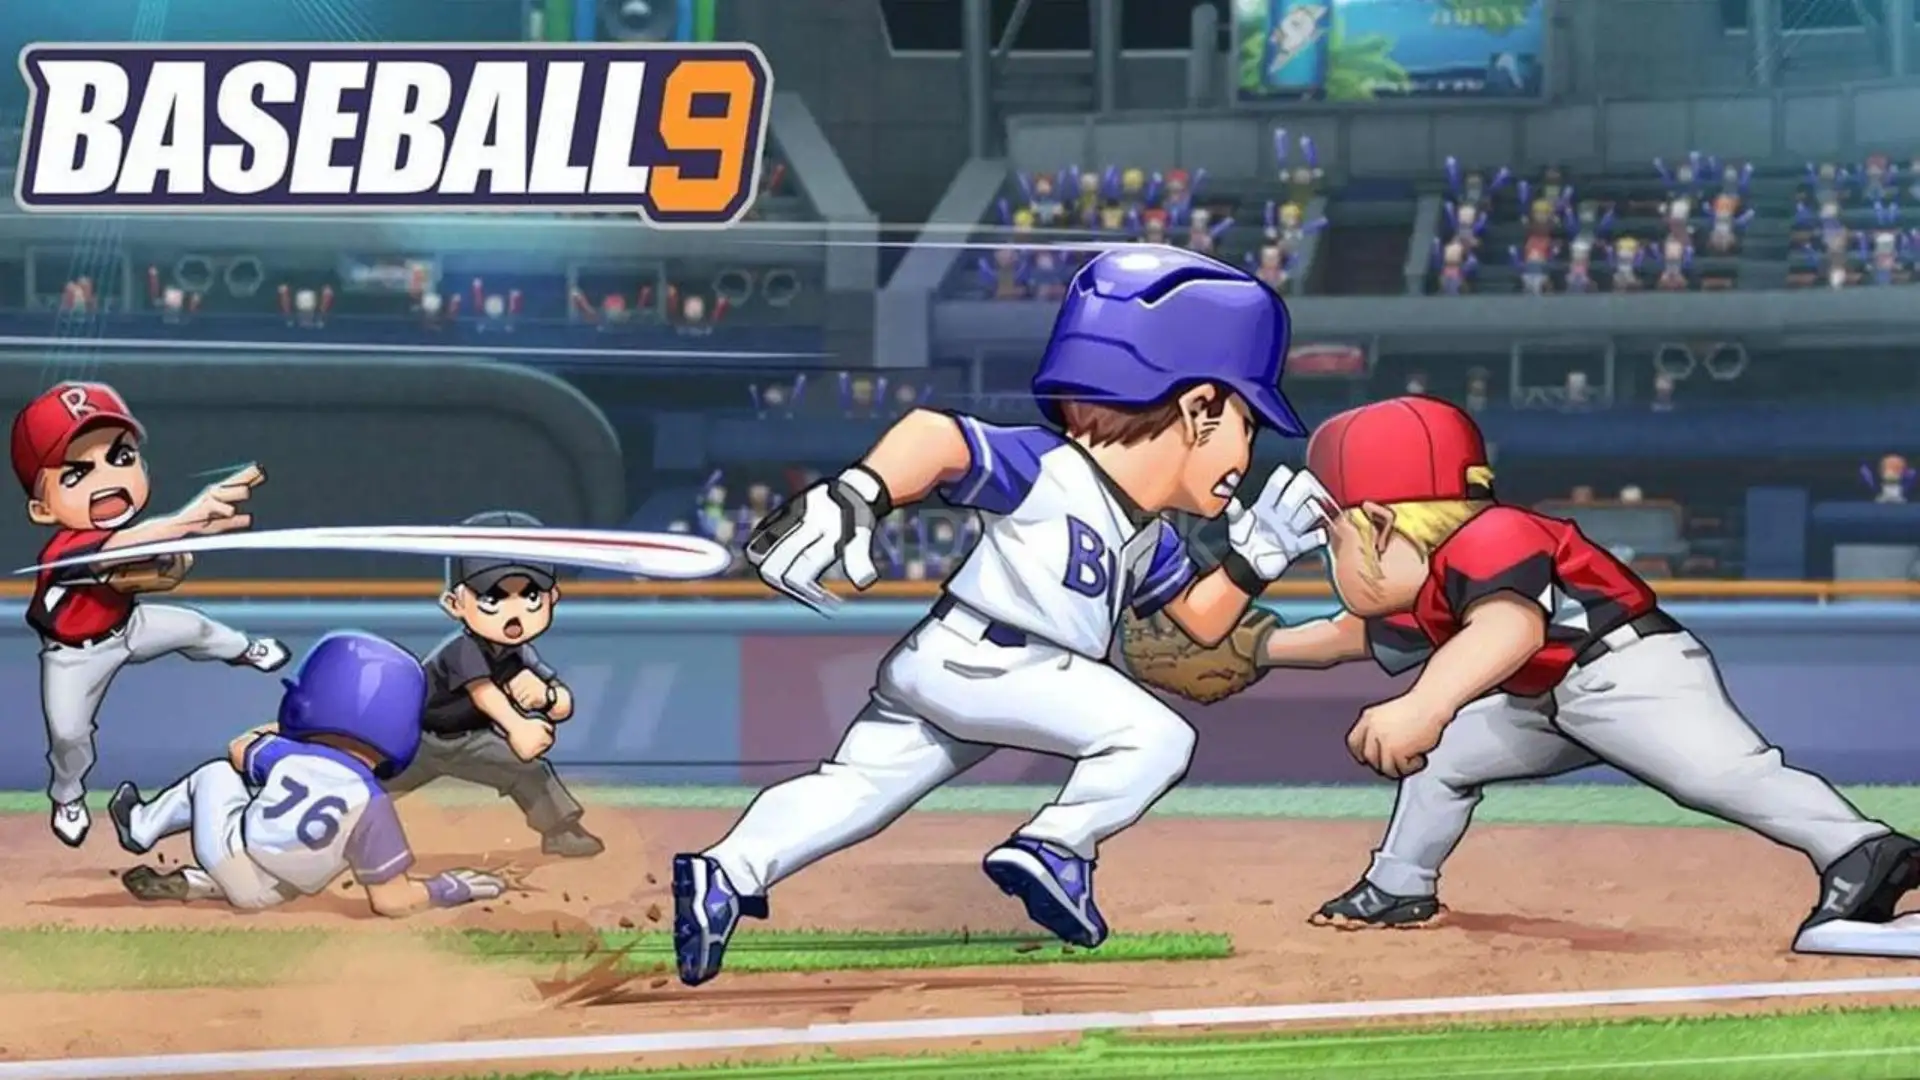 Baseball 9 feature image